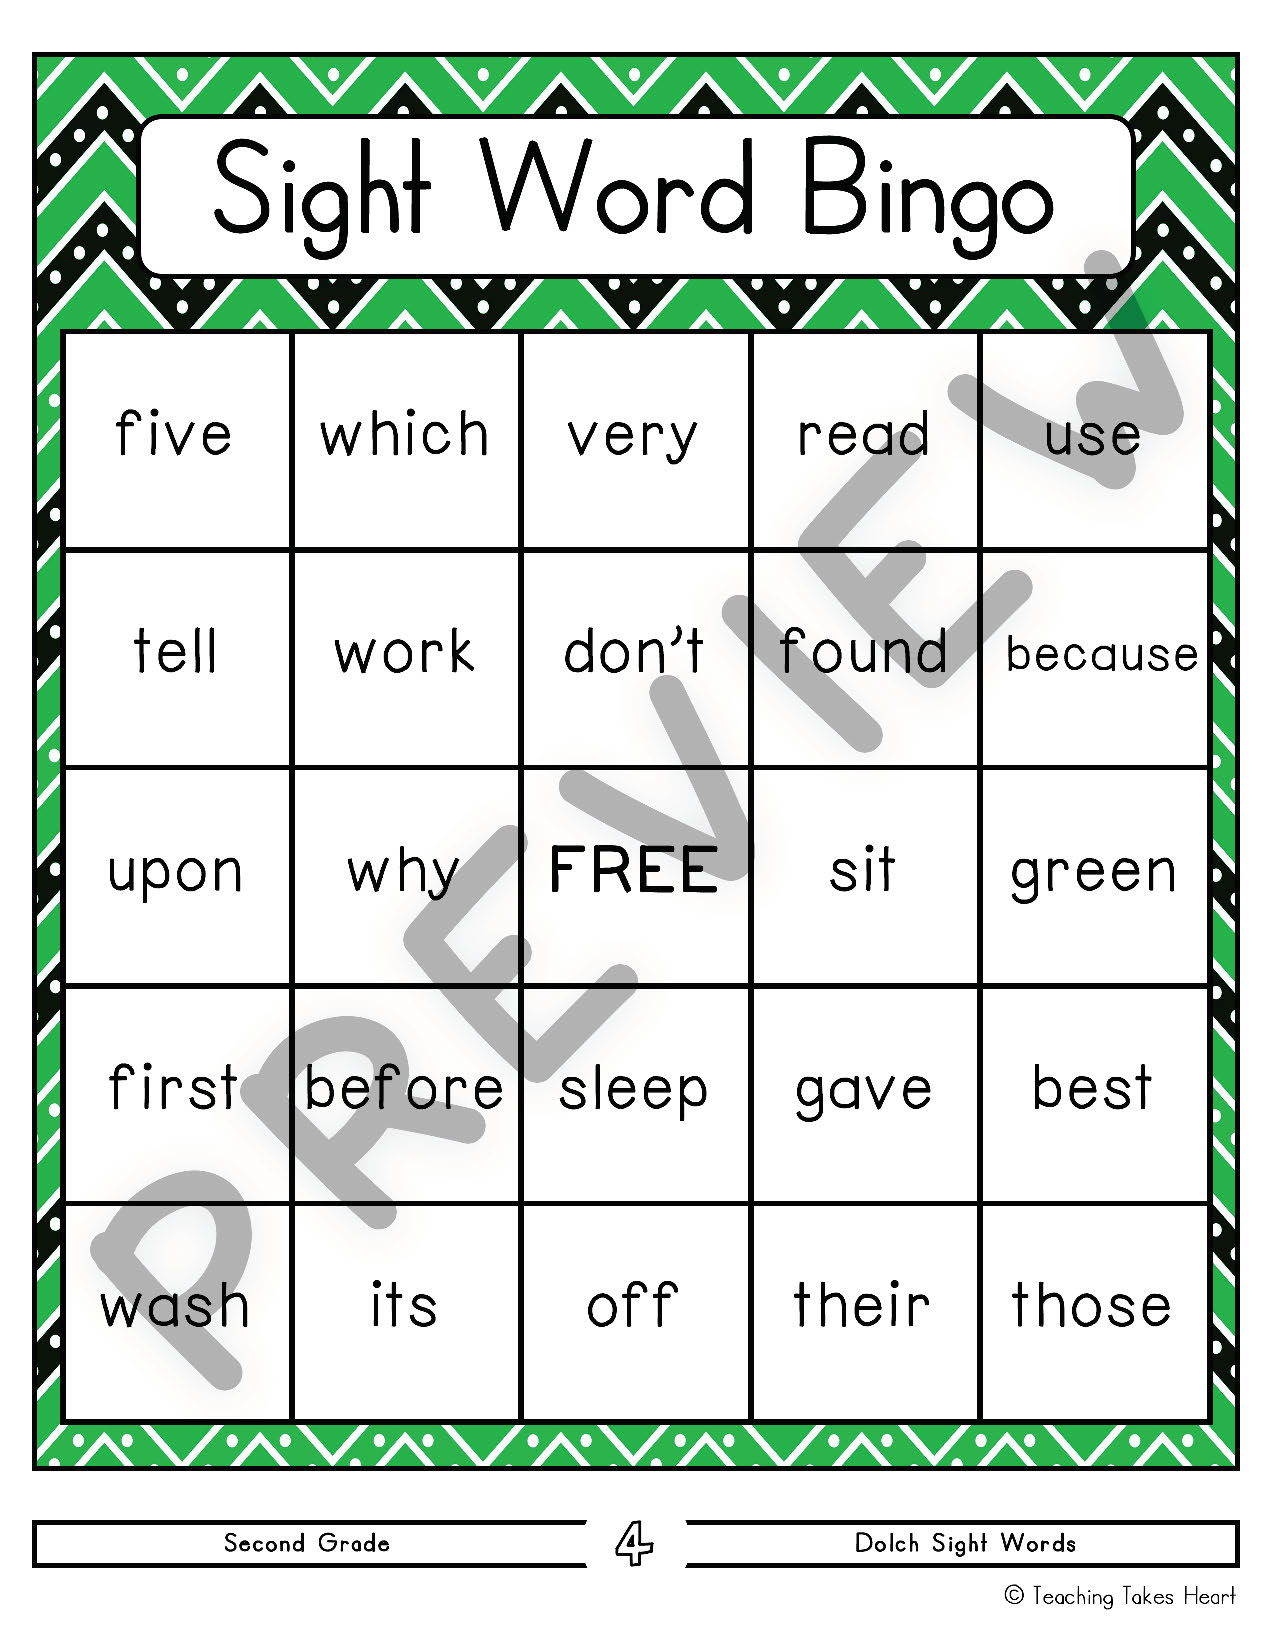 sight-word-bingo-second-grade-teaching-takes-heart